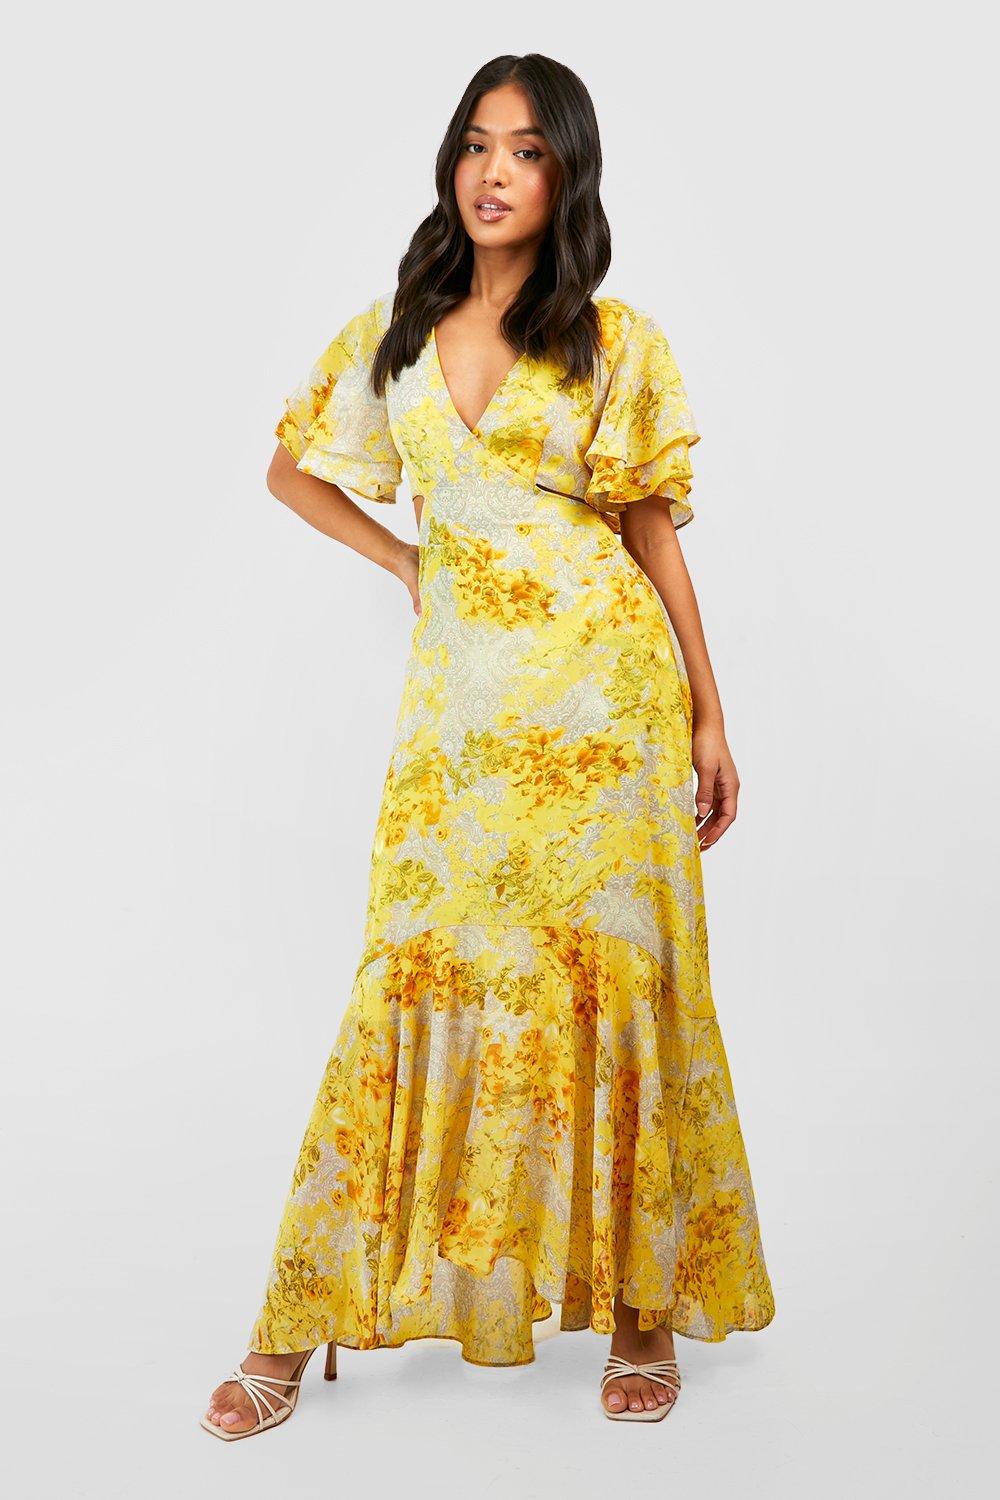 yellow floral maxi dress